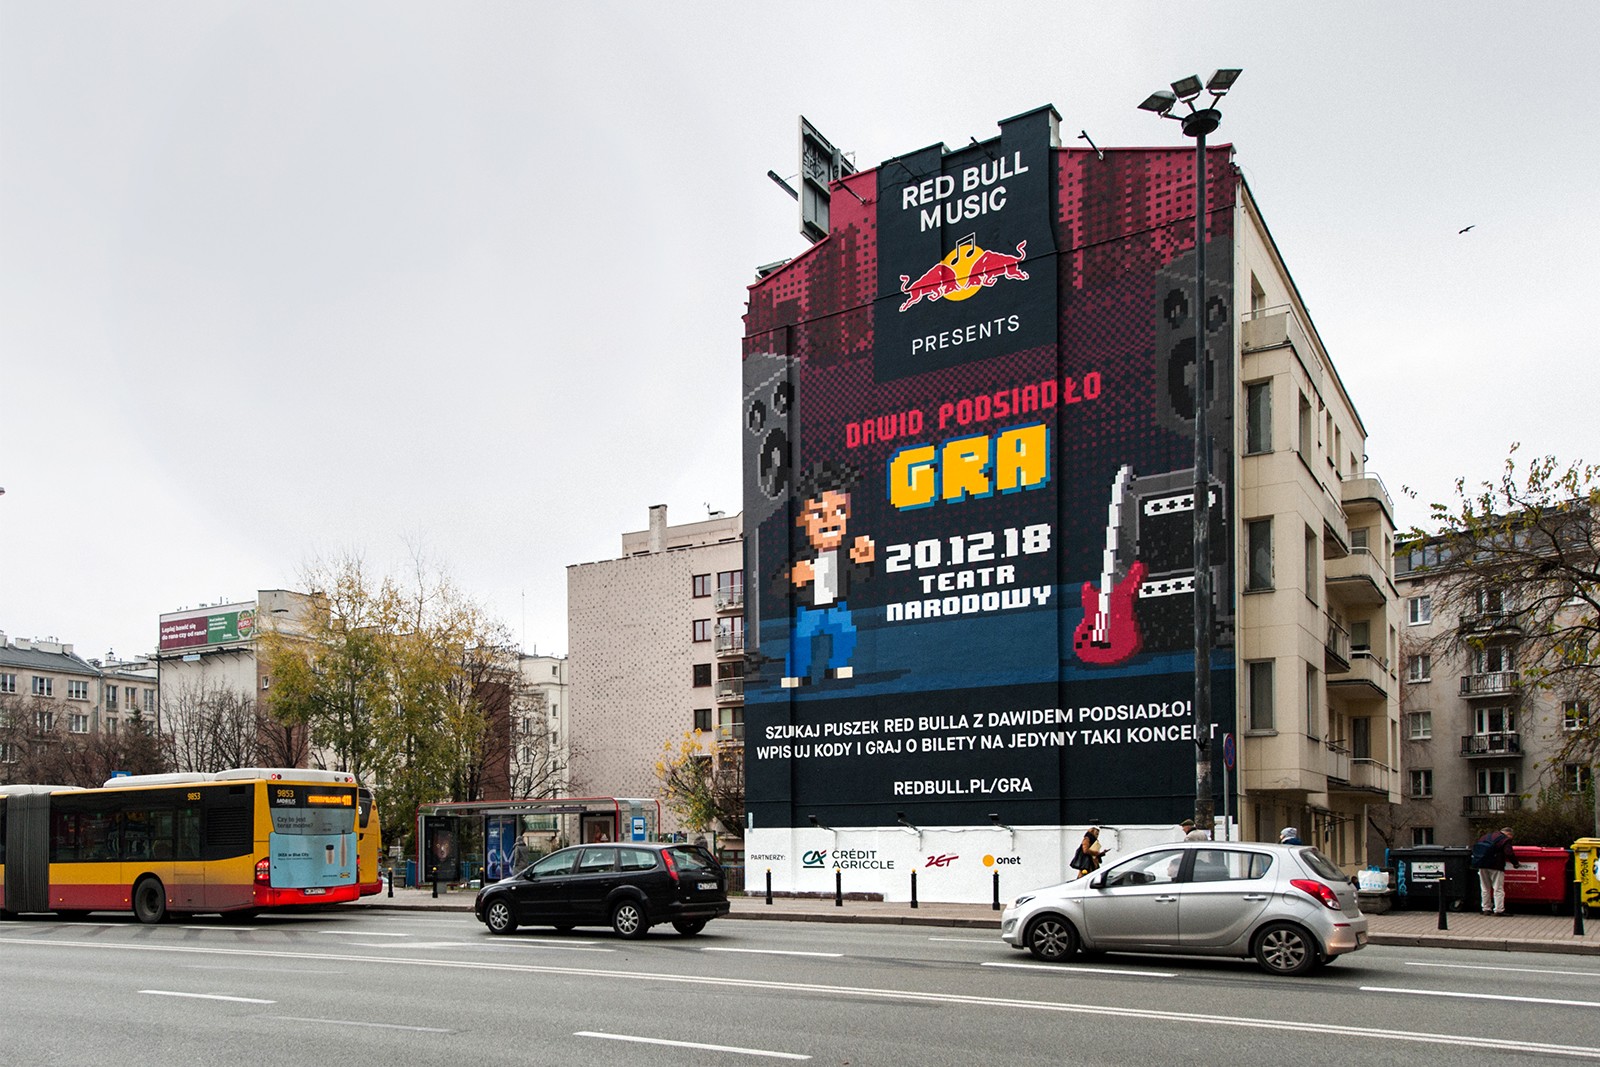 Mural advertising the concert Dawid Podsiadlo Red Bull Music in Warsaw | Red Bull Music | Portfolio